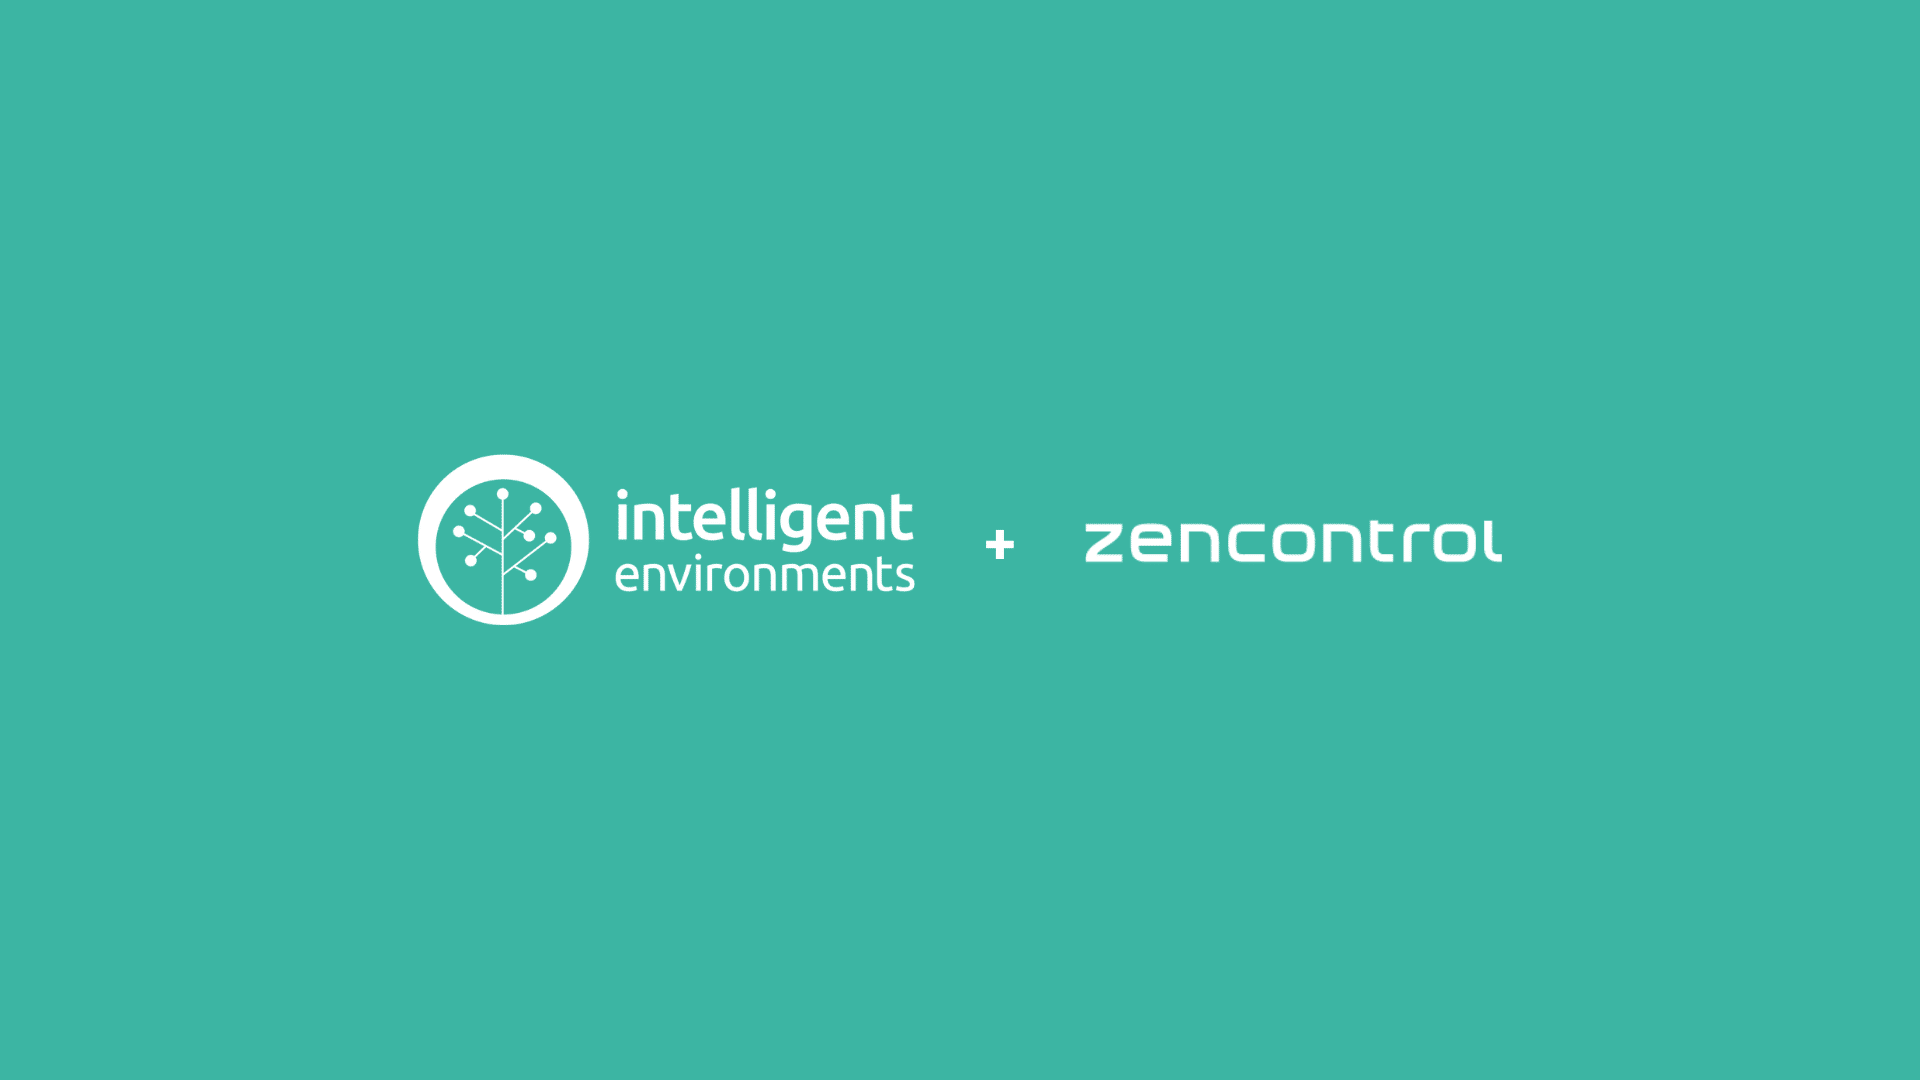 zencontrol partnership herobanner  - Our Partnership with zencontrol